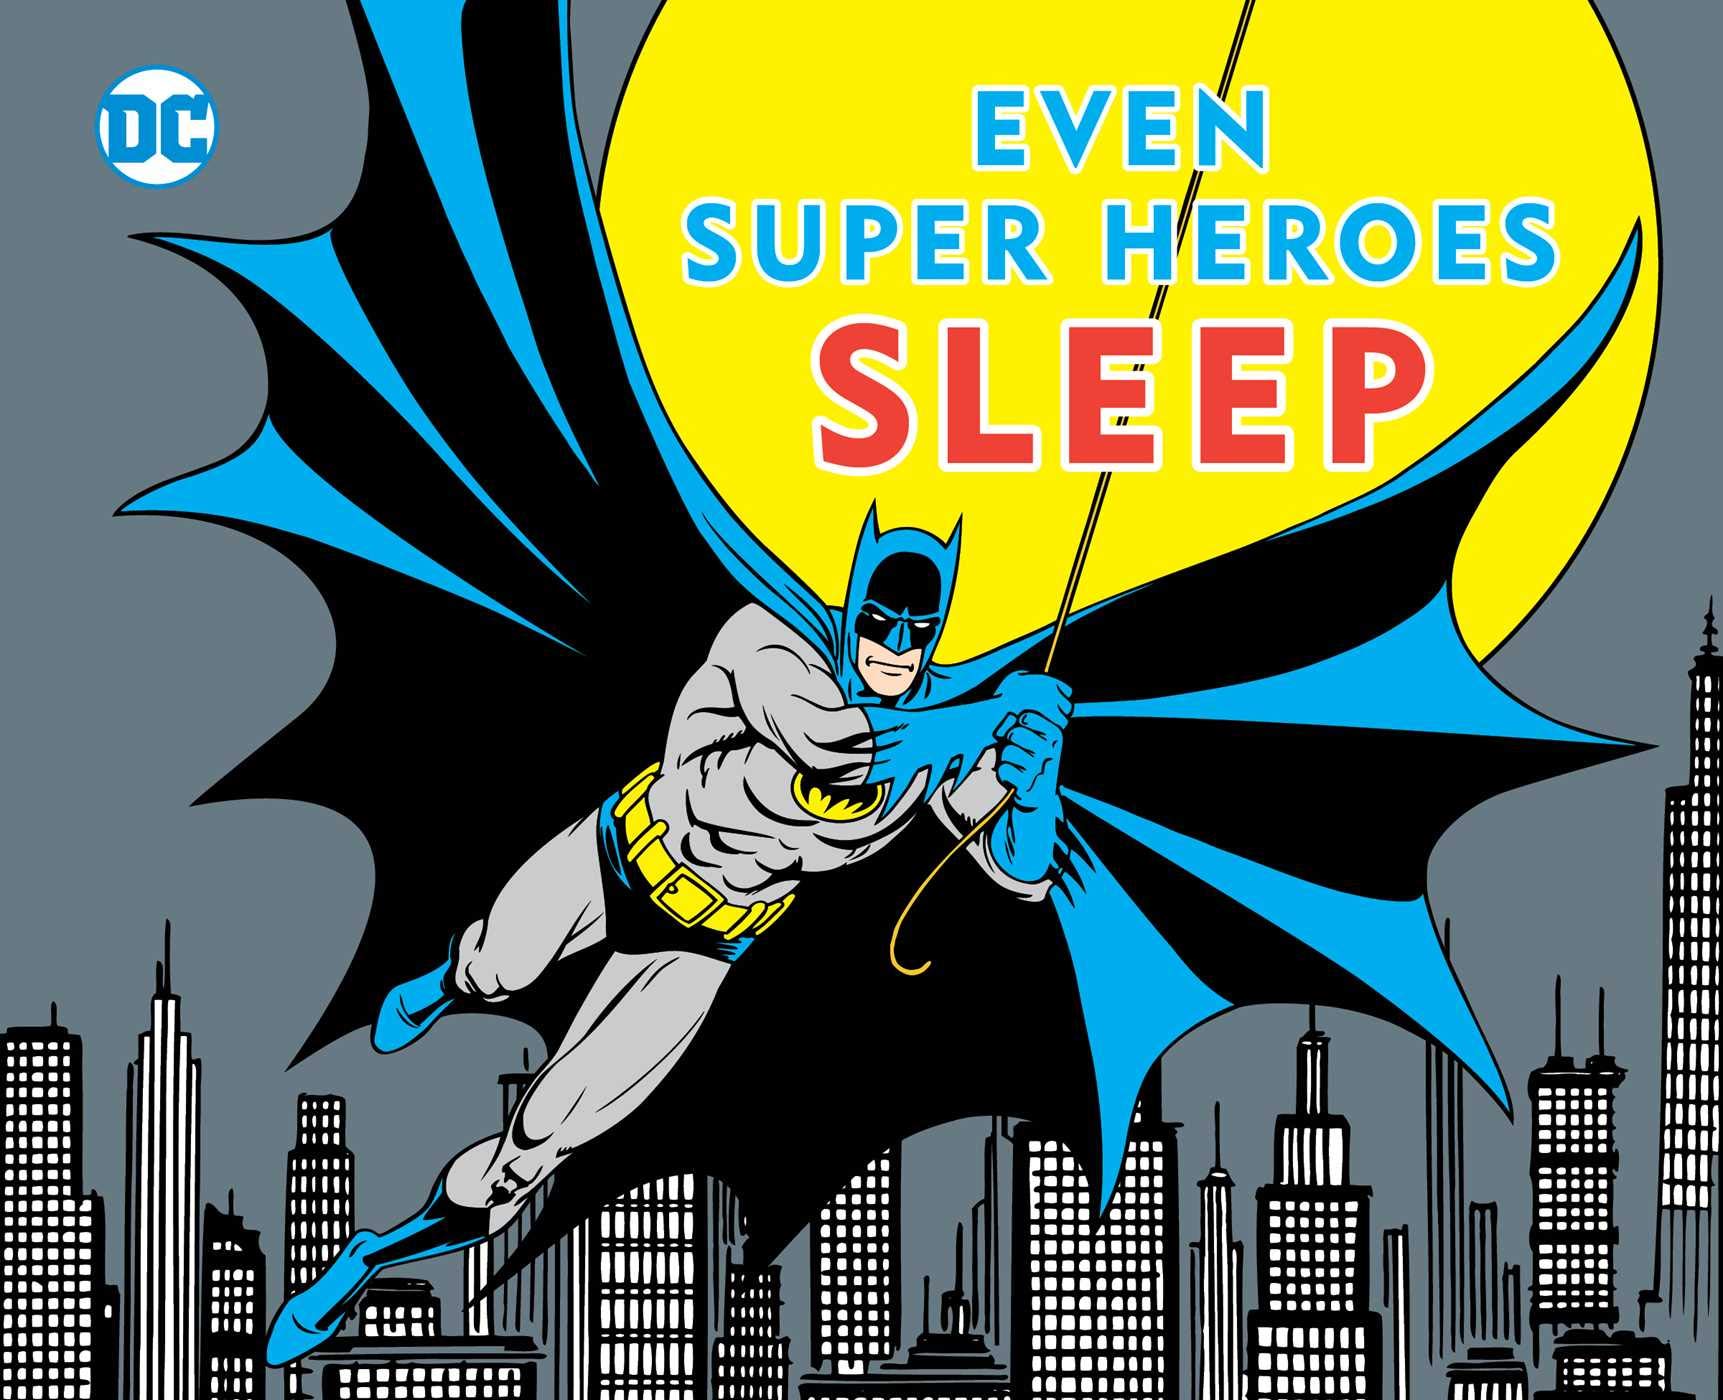 EVEN SUPER HEROES SLEEP (DC Super Heroes)